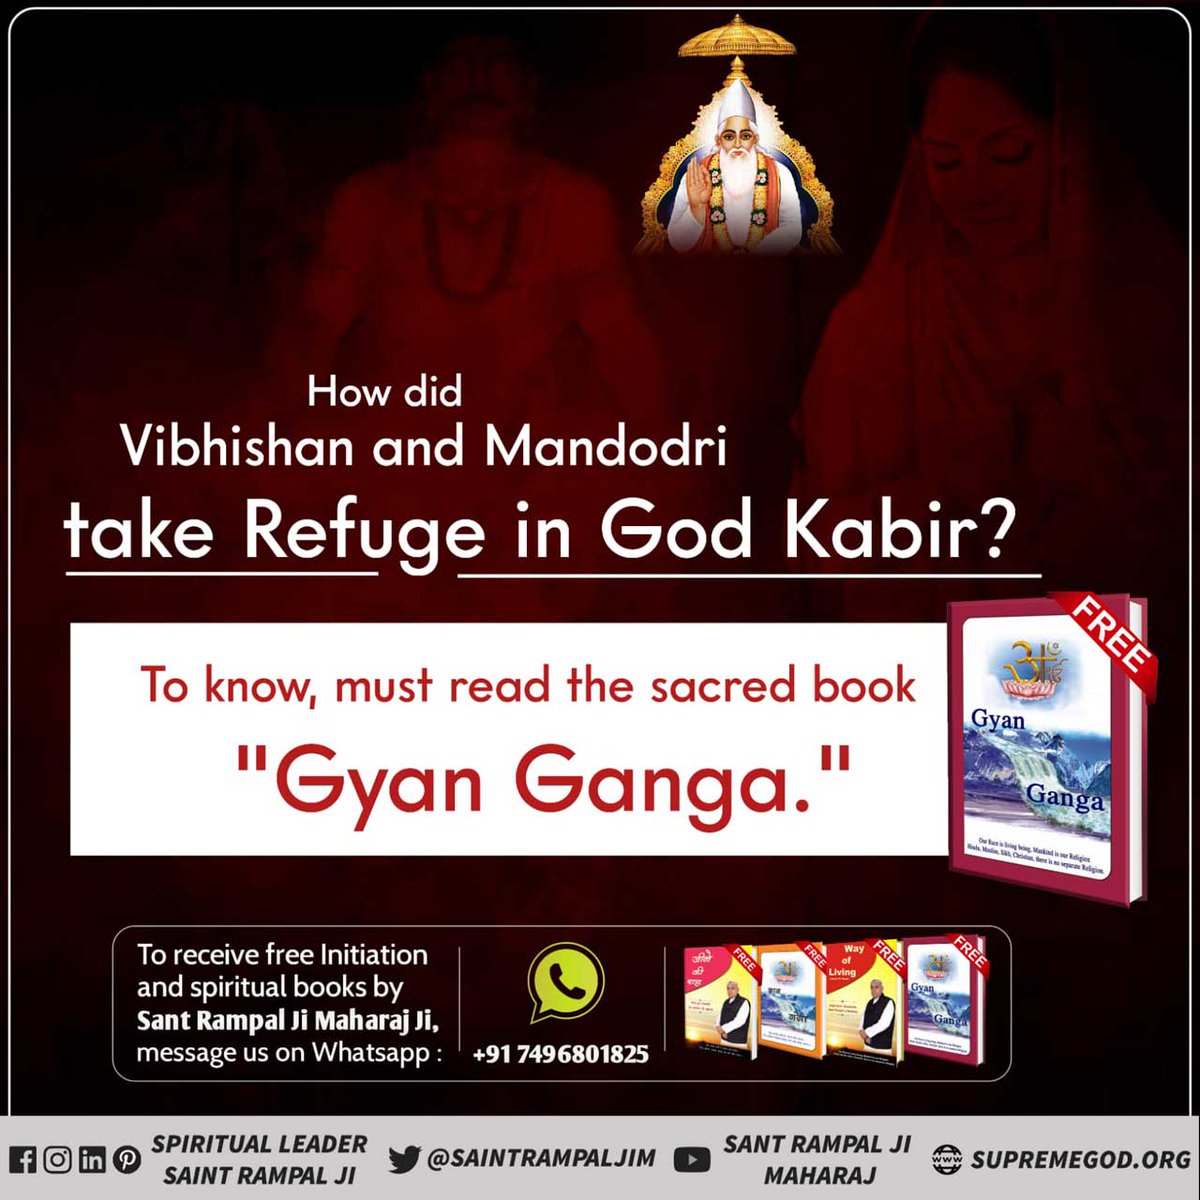 #GodNightMonday 
How did
Vibhishan and Mandodri
take Refuge in God Kabir?
To know more must read the previous book 'Gyan Ganga'' by Sant Rampal Ji Maharaj
Visit Satlok Ashram YouTube Channel
#MondayMotivation